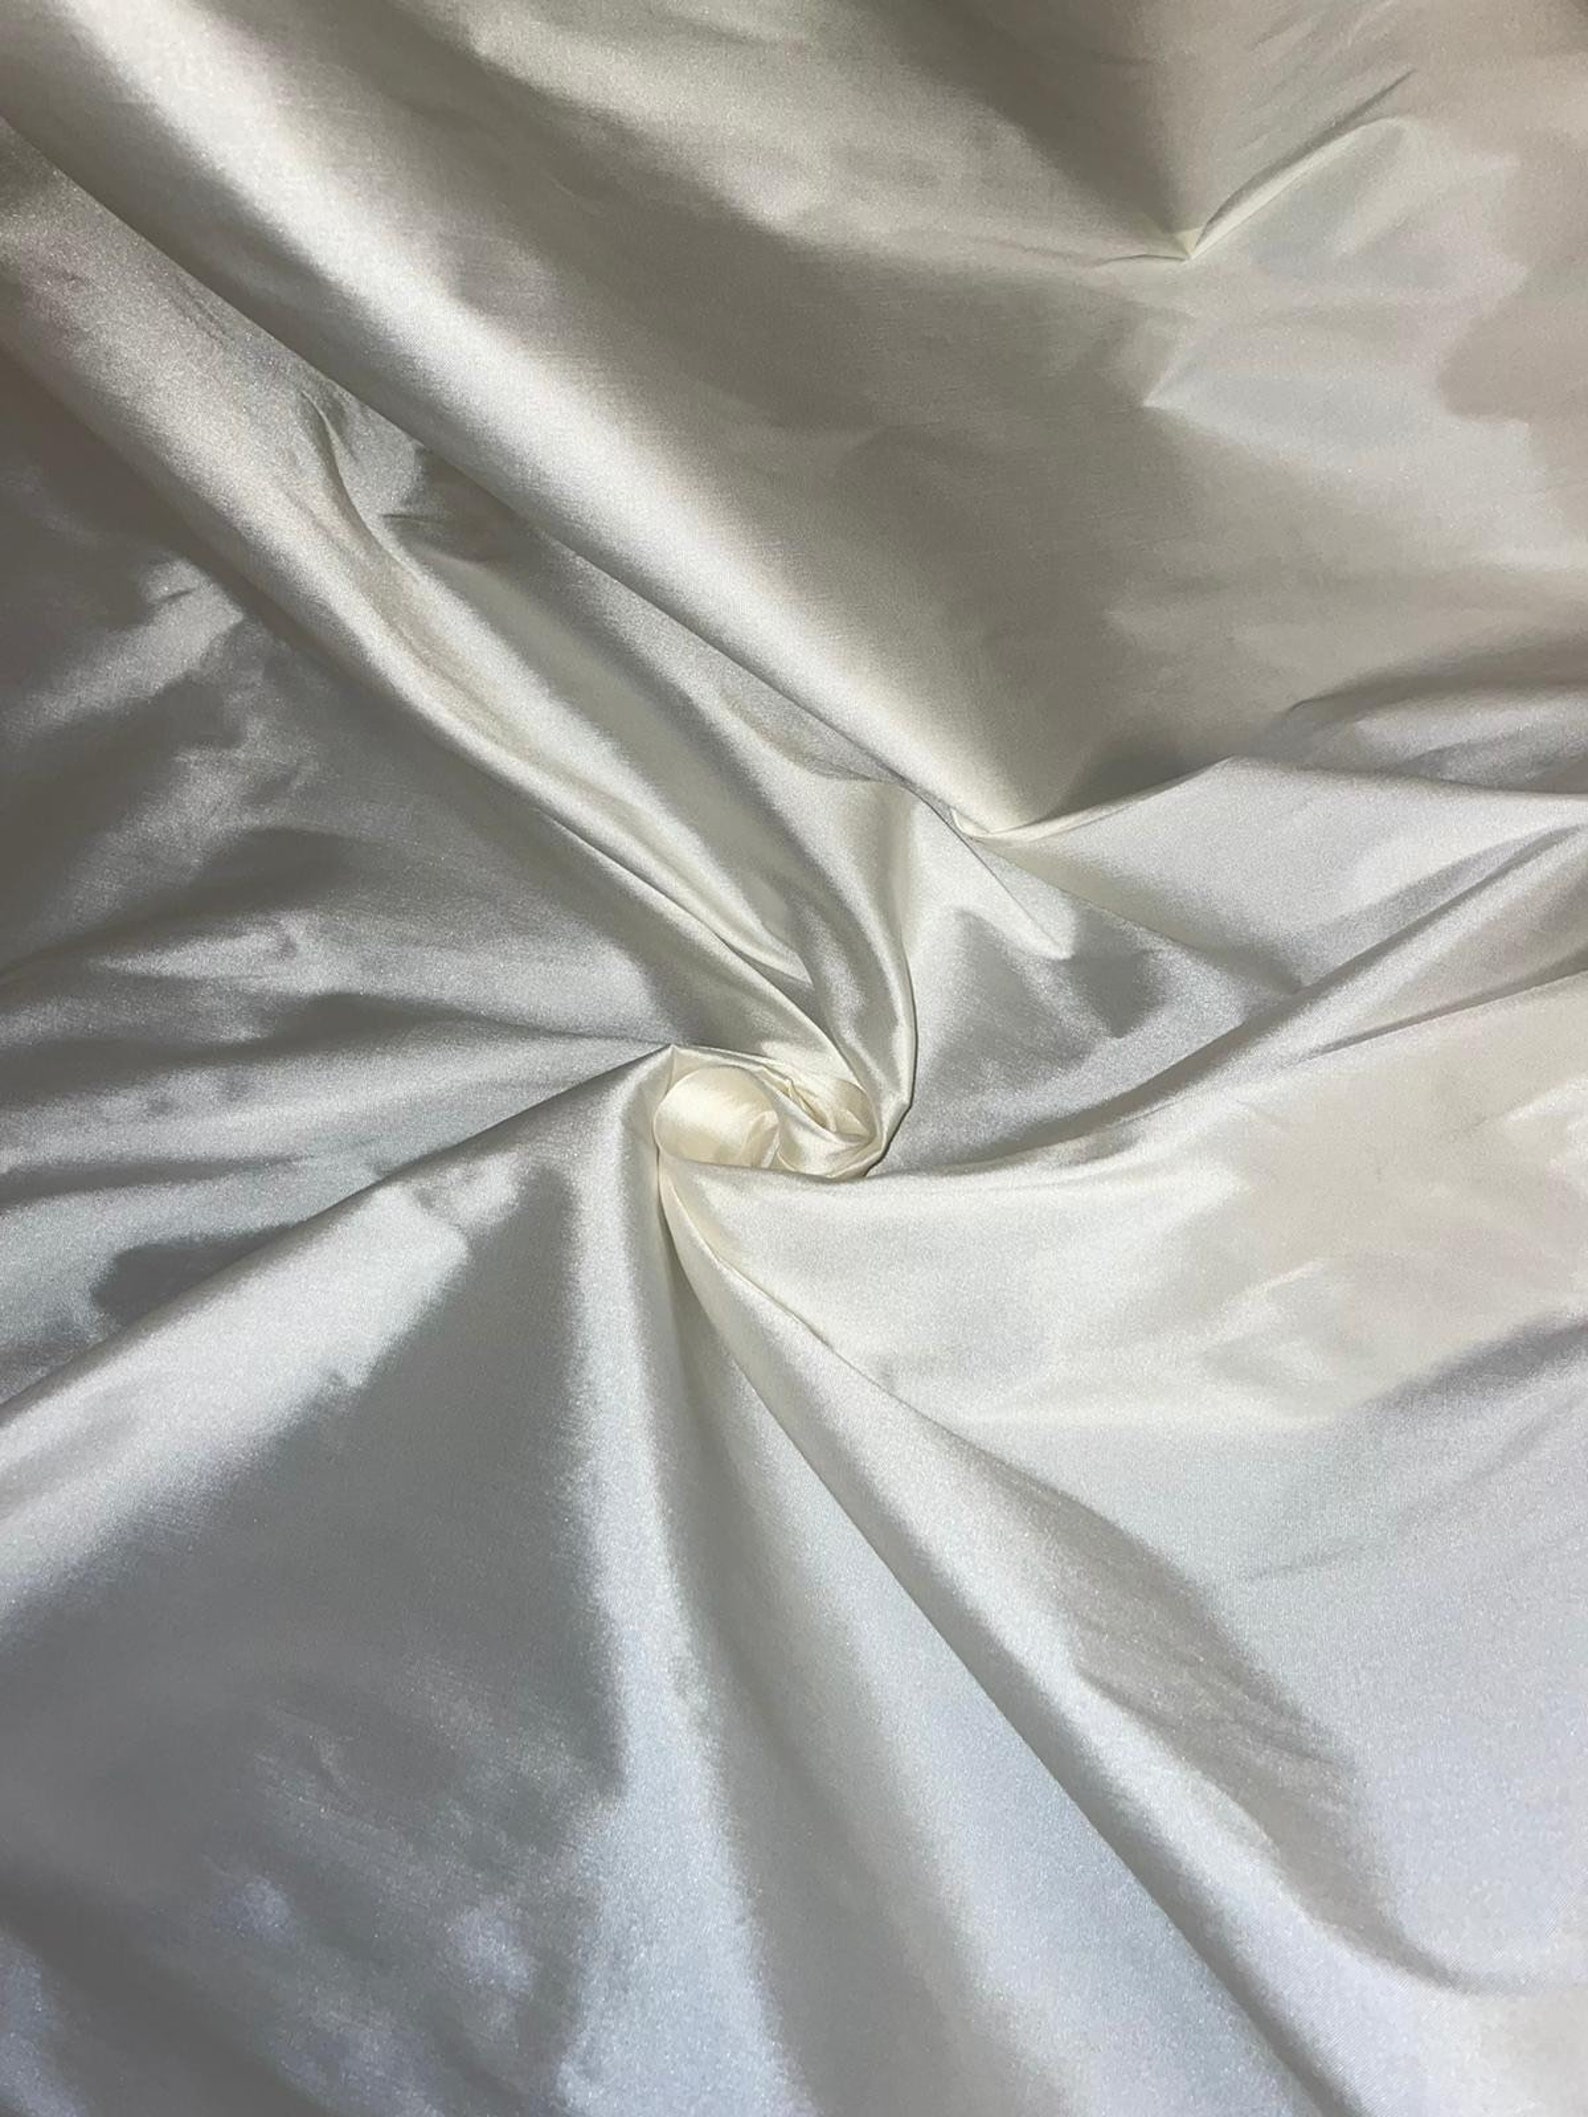 1 Meter Ivory Taffeta Bridal Fabric 58 Wide | Etsy